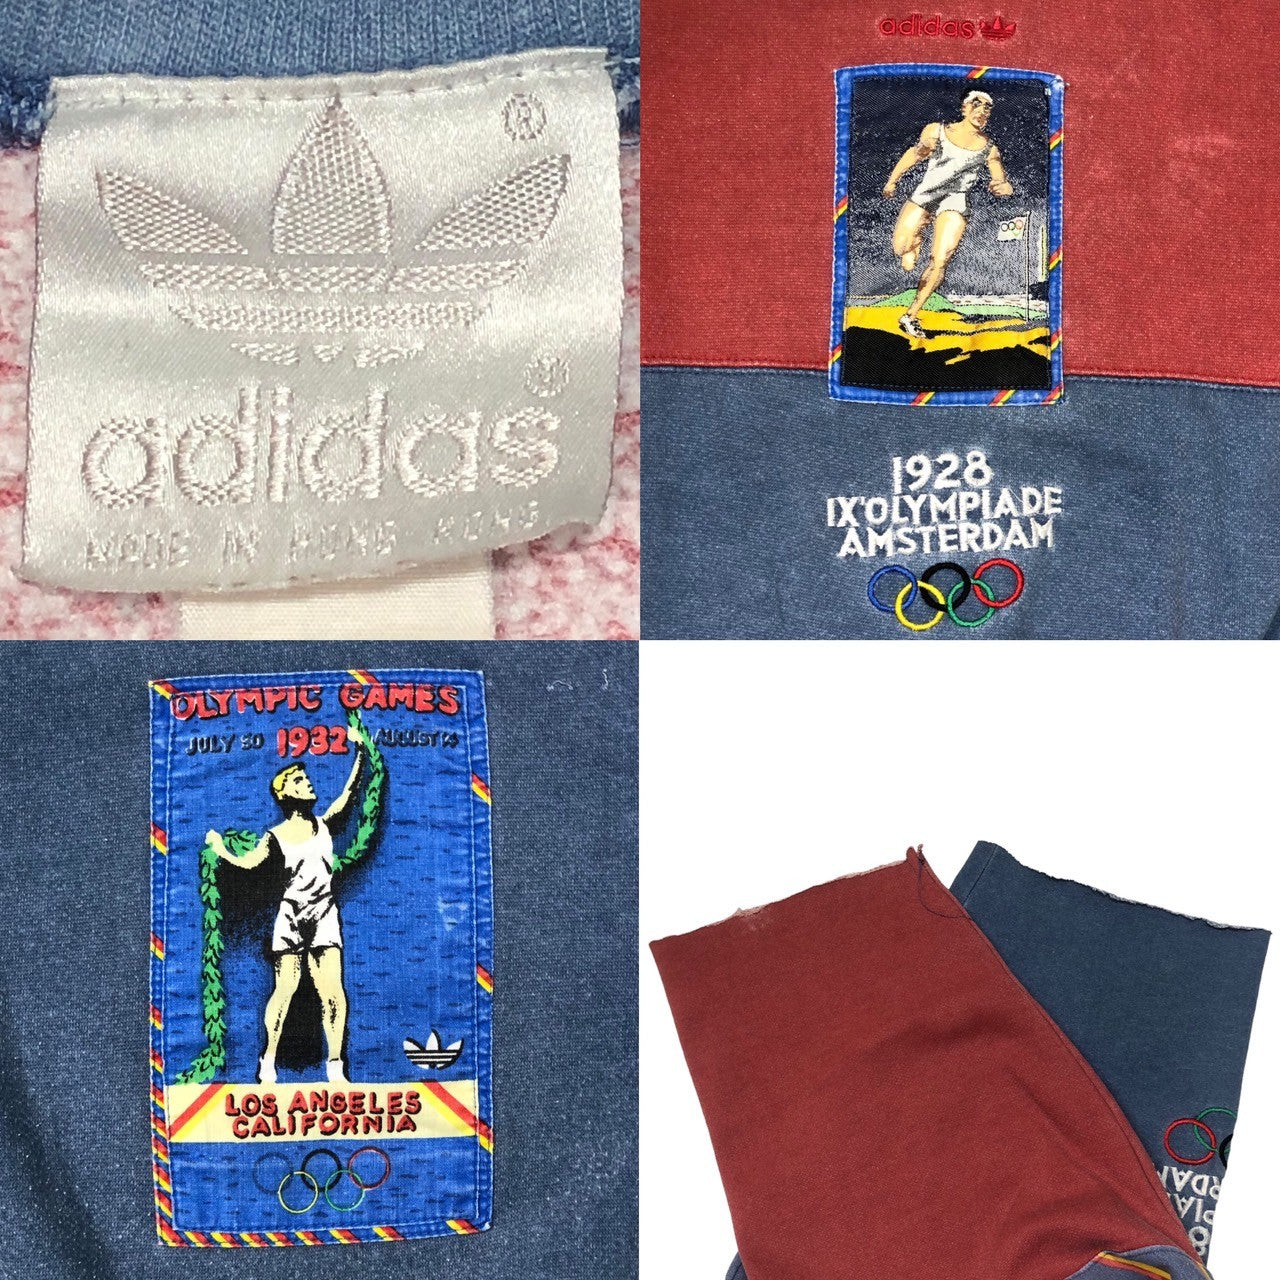 adidas(アディダス) 80's 1928 IX olympiade Amsterdam sweatshirt 